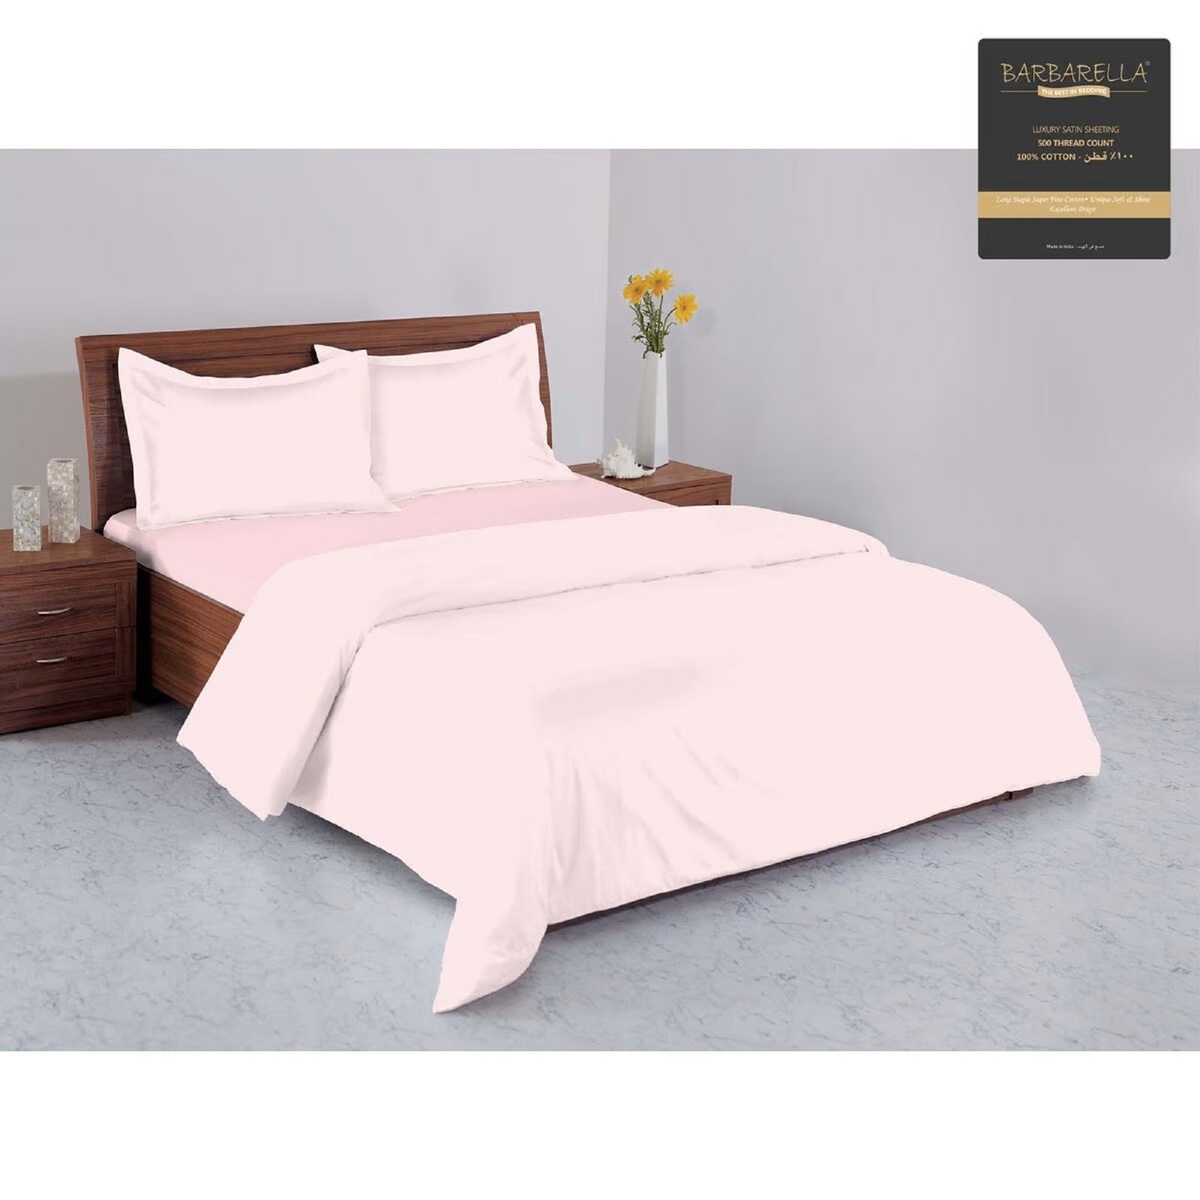 Barbarella Cotton Bed Sheet 500TC 240x260cm Pink